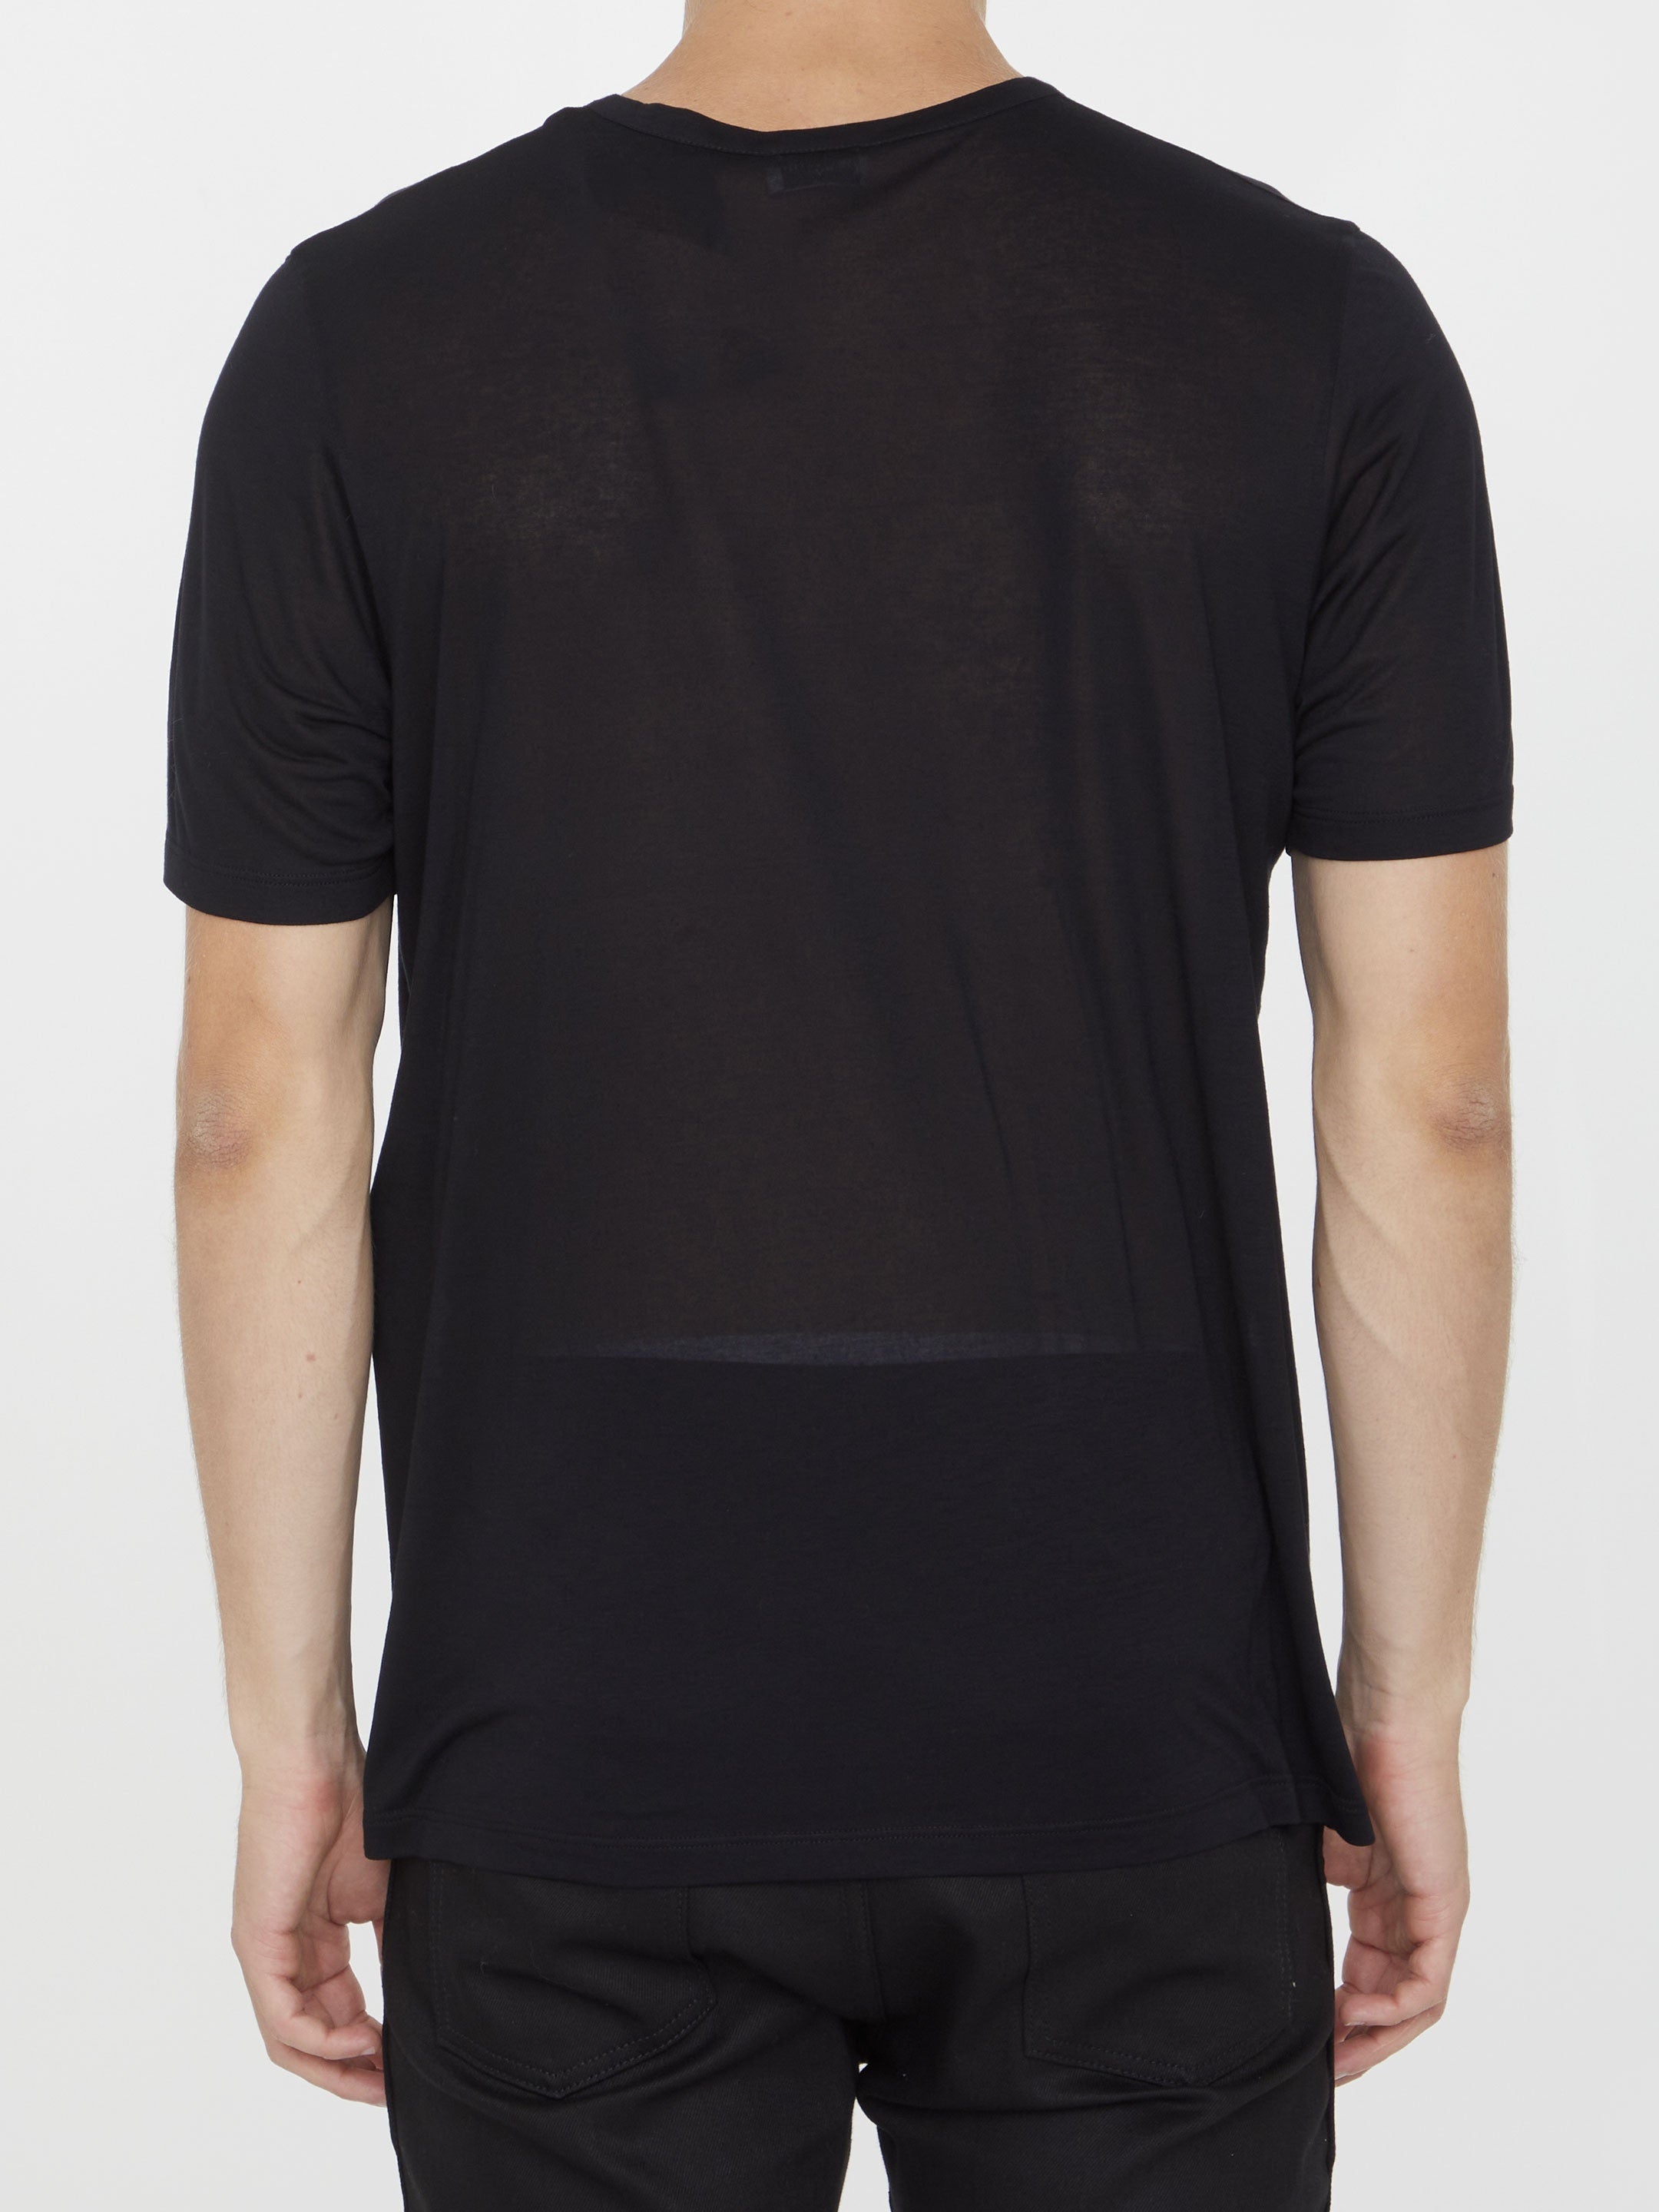 SAINT-LAURENT-OUTLET-SALE-Black-t-shirt-with-logo-Shirts-ARCHIVE-COLLECTION-4.jpg